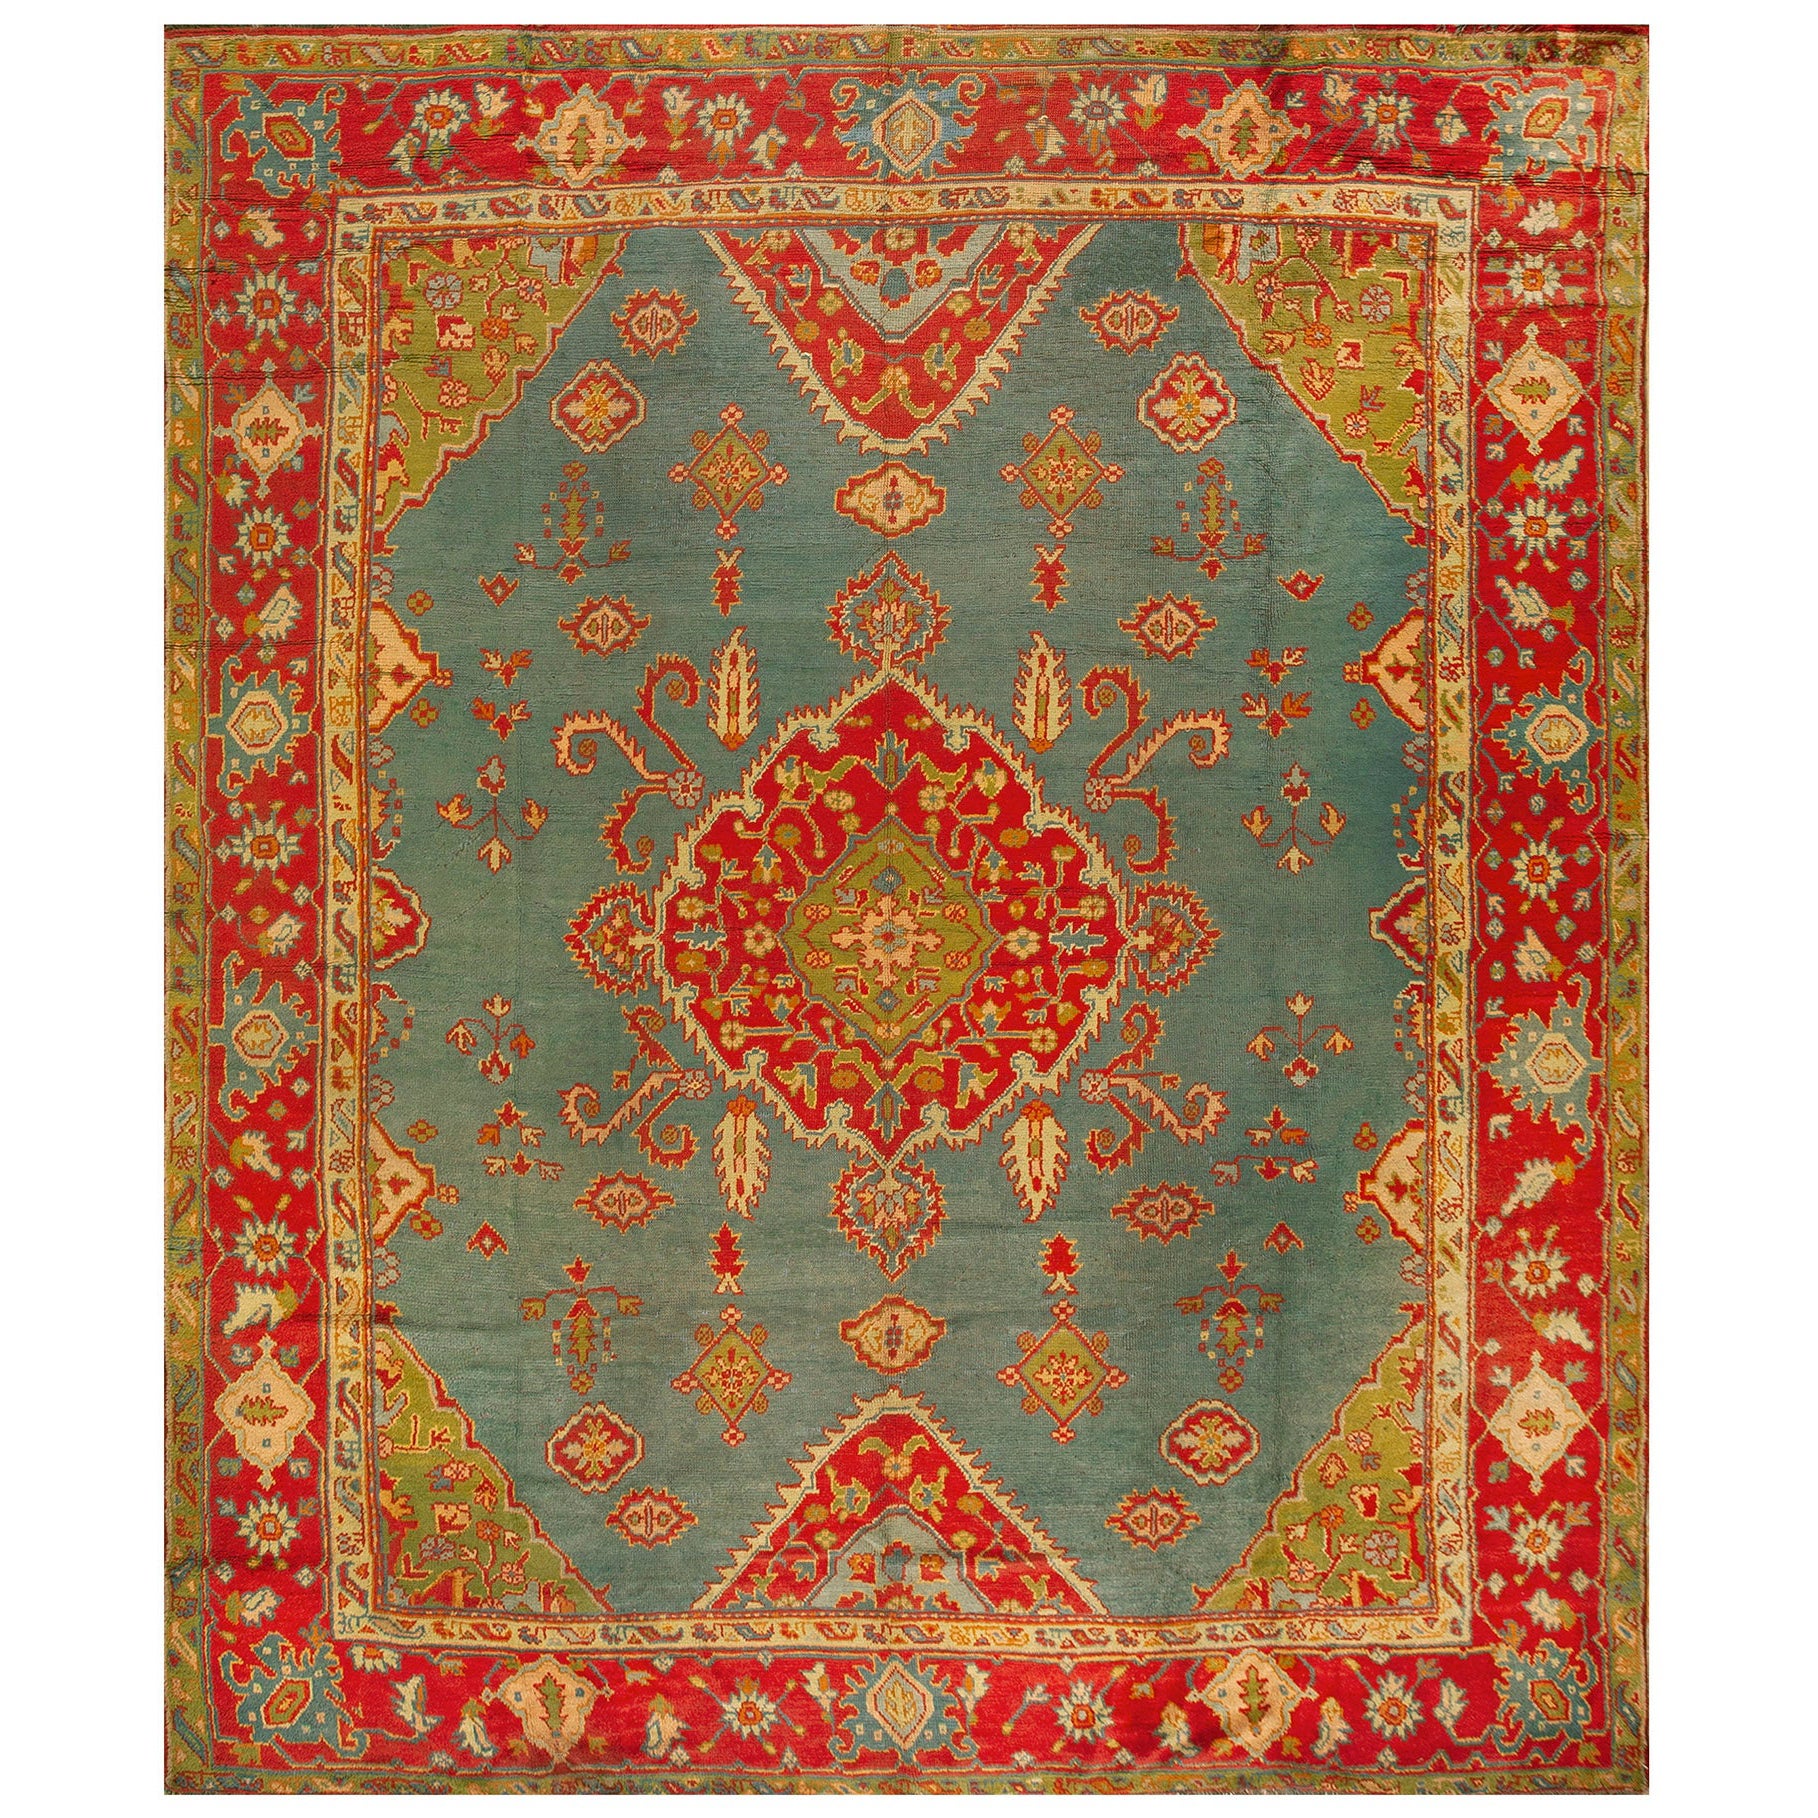 Late 19th Century Turkish Oushak Carpet ( 11' 2'' x 13' 1'' - 340 x 398 cm ) For Sale